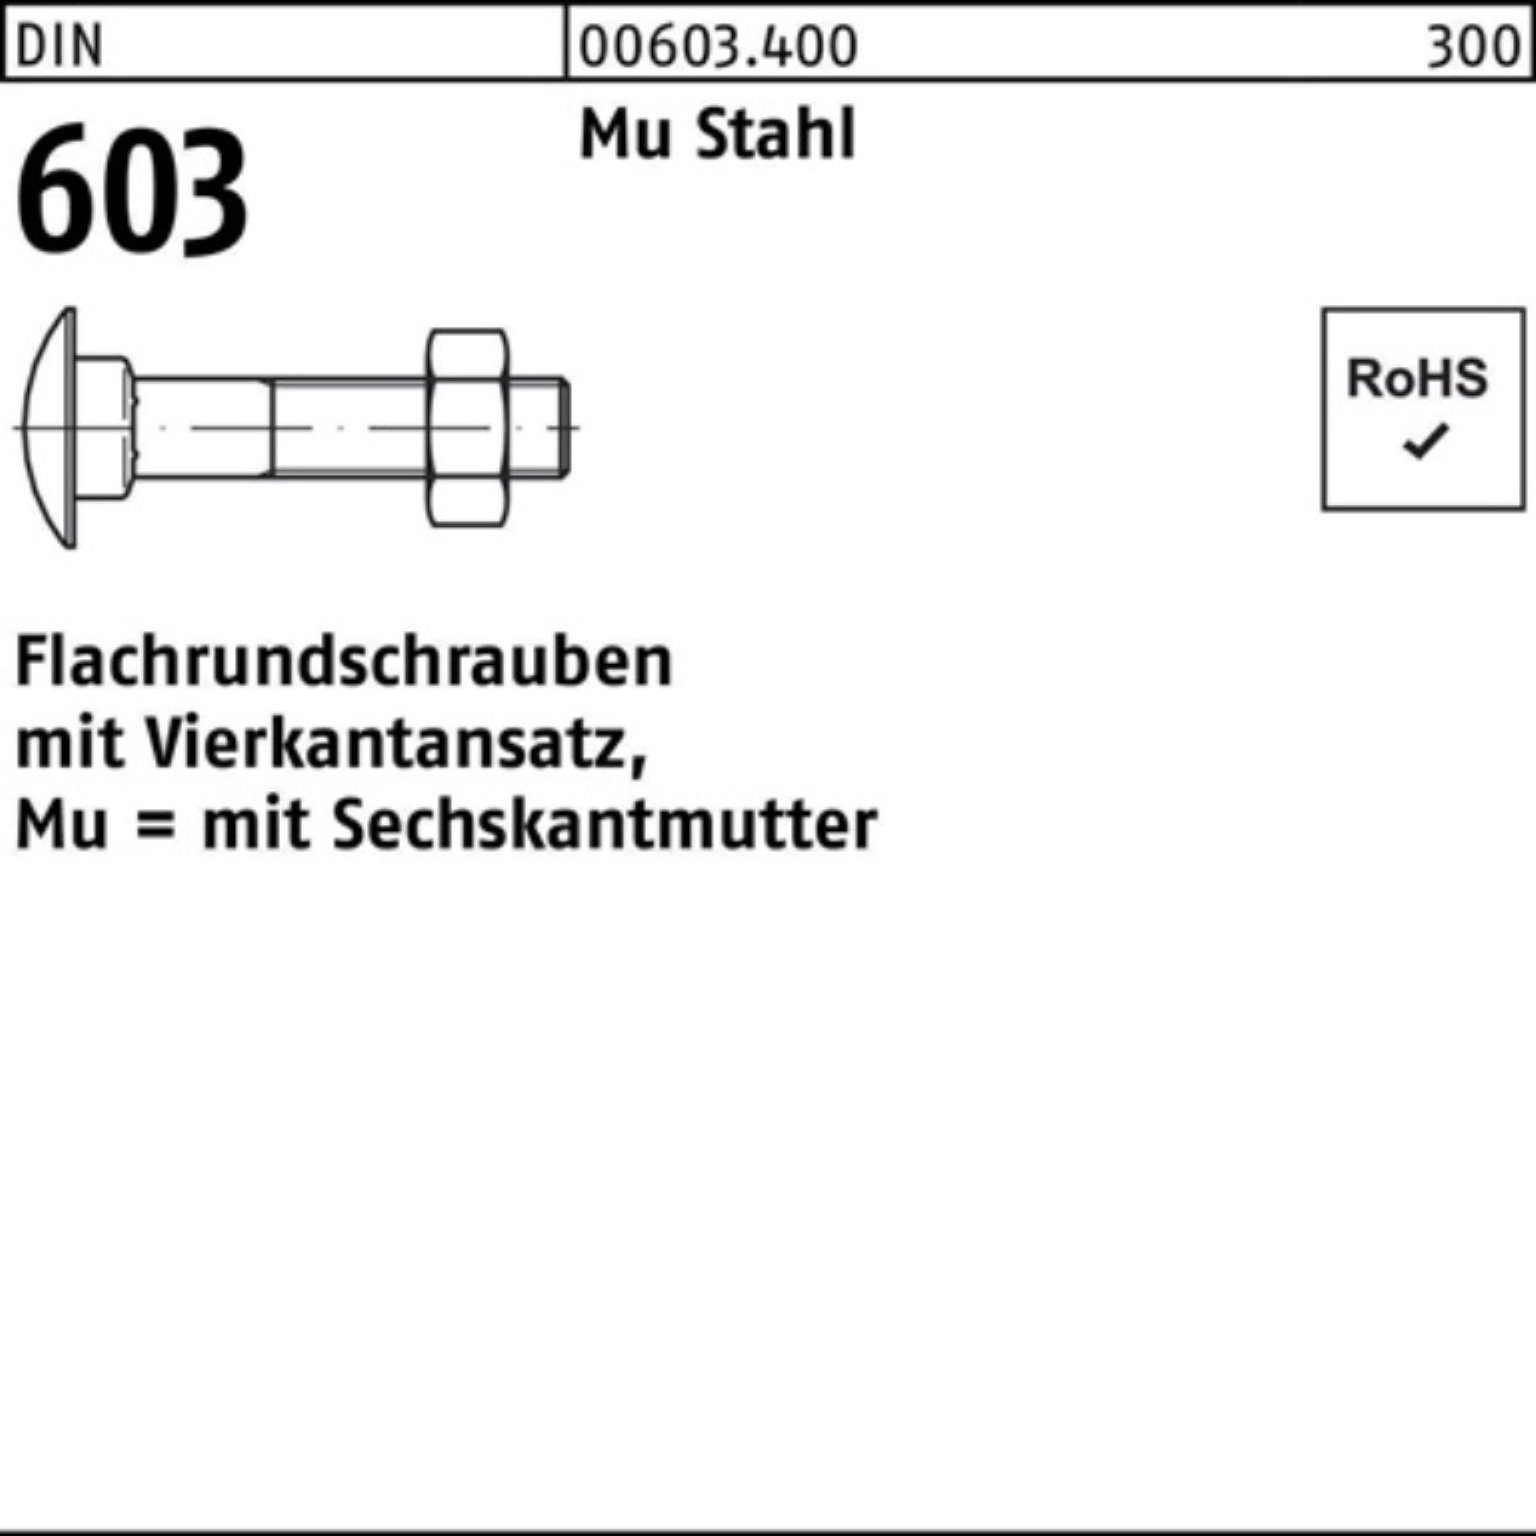 Reyher Schraube 200er M8x30 603 DIN M Vierkantansatz/6-ktmutter Pack Flachrundschraube